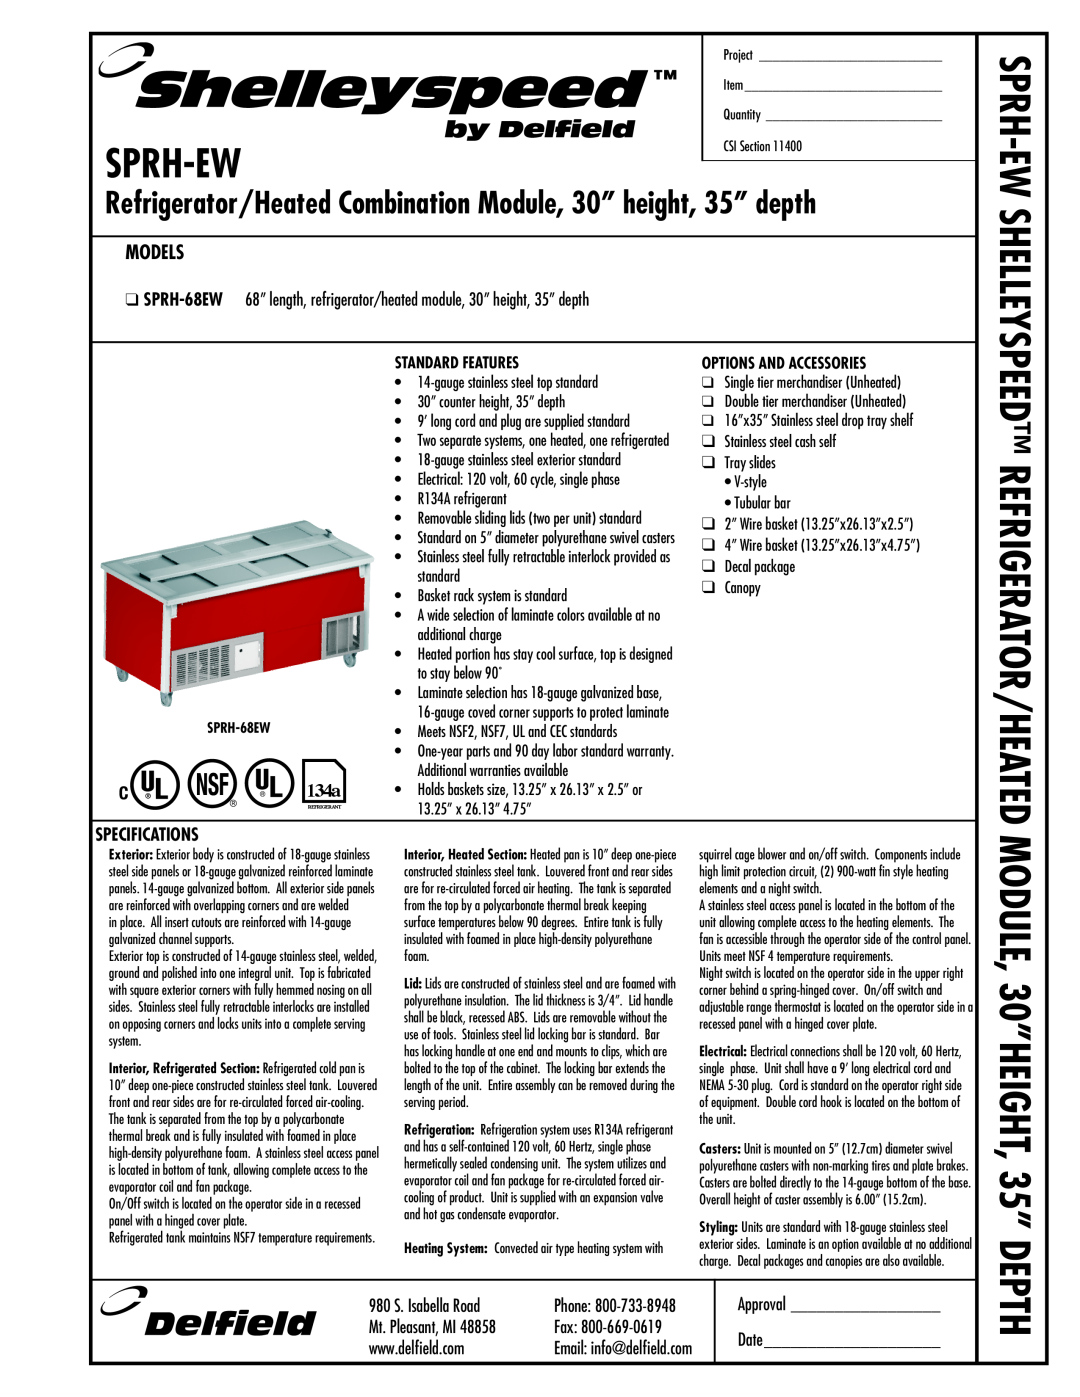 Delfield SPRH-EW manual Specifications, 980 S. Isabella Road, Phone, Mt. Pleasant, MI, Fax, Sprh-Ew, Refrigerator/Heated 